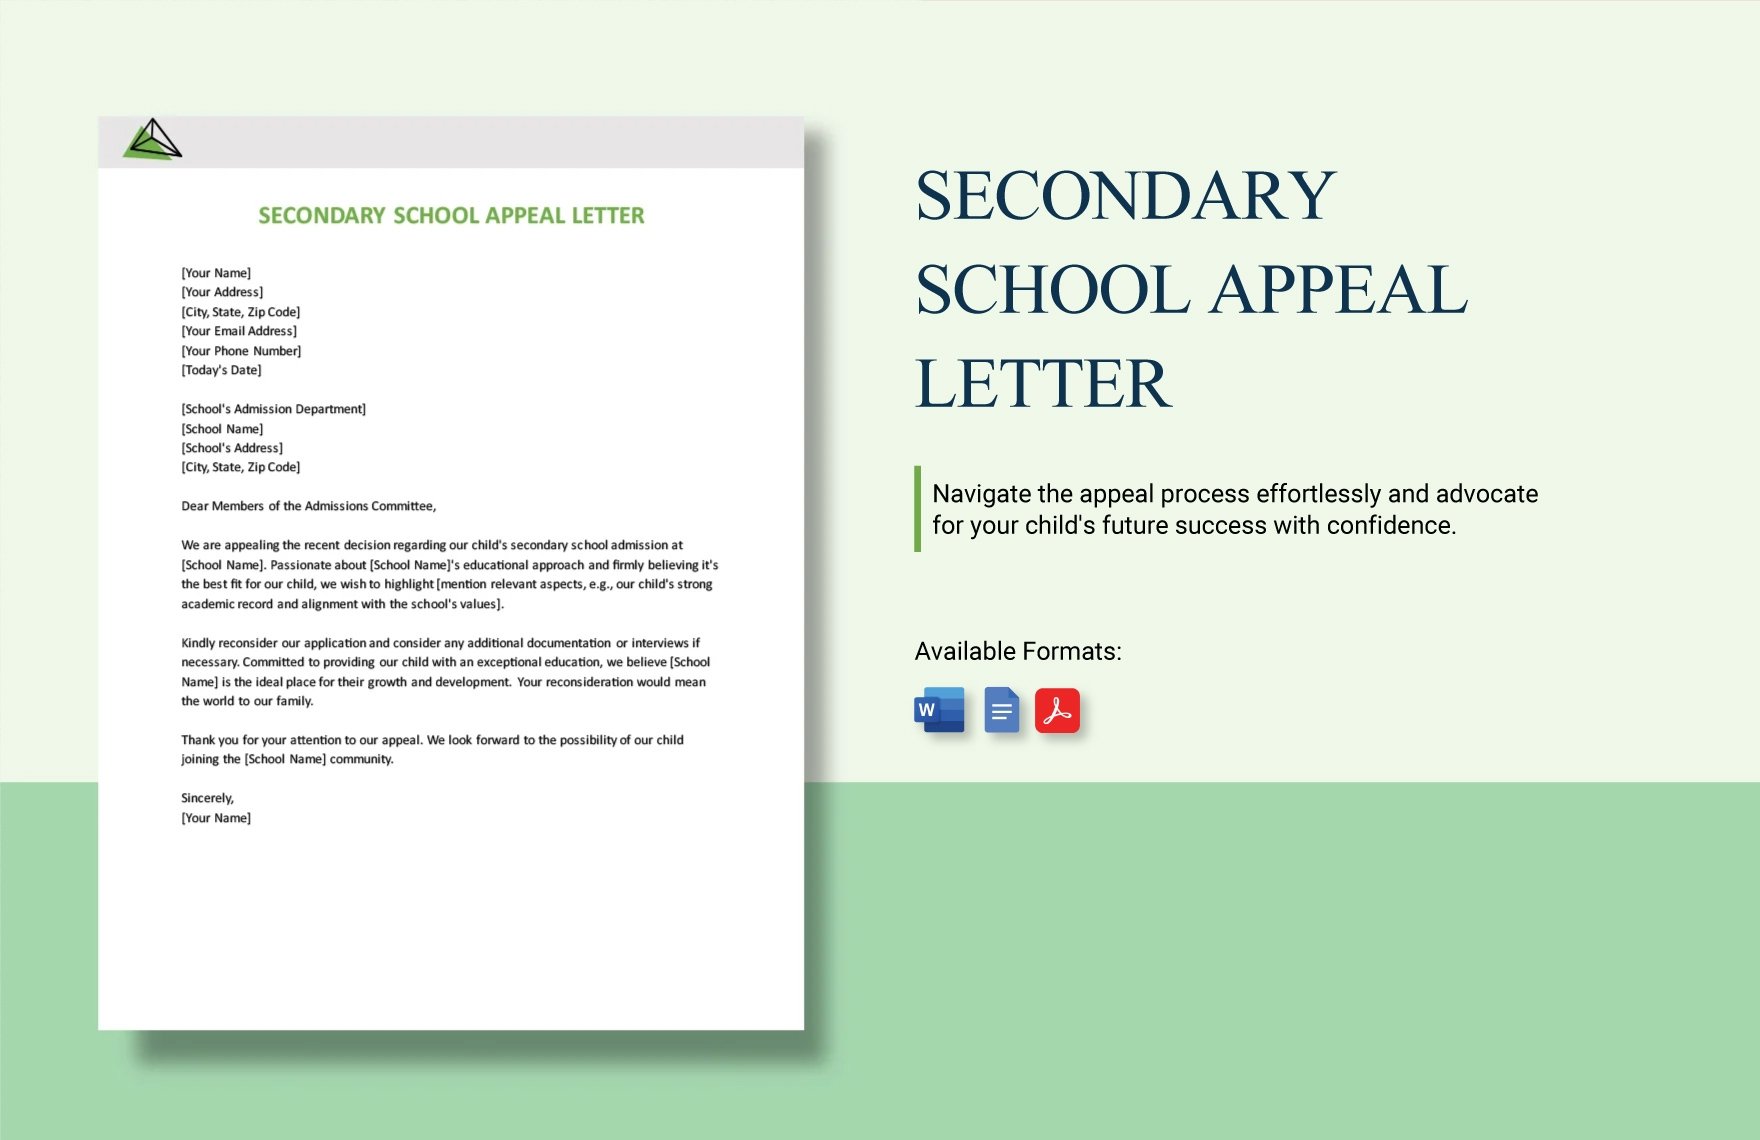 Secondary School Appeal Letter in Word, Google Docs, PDF